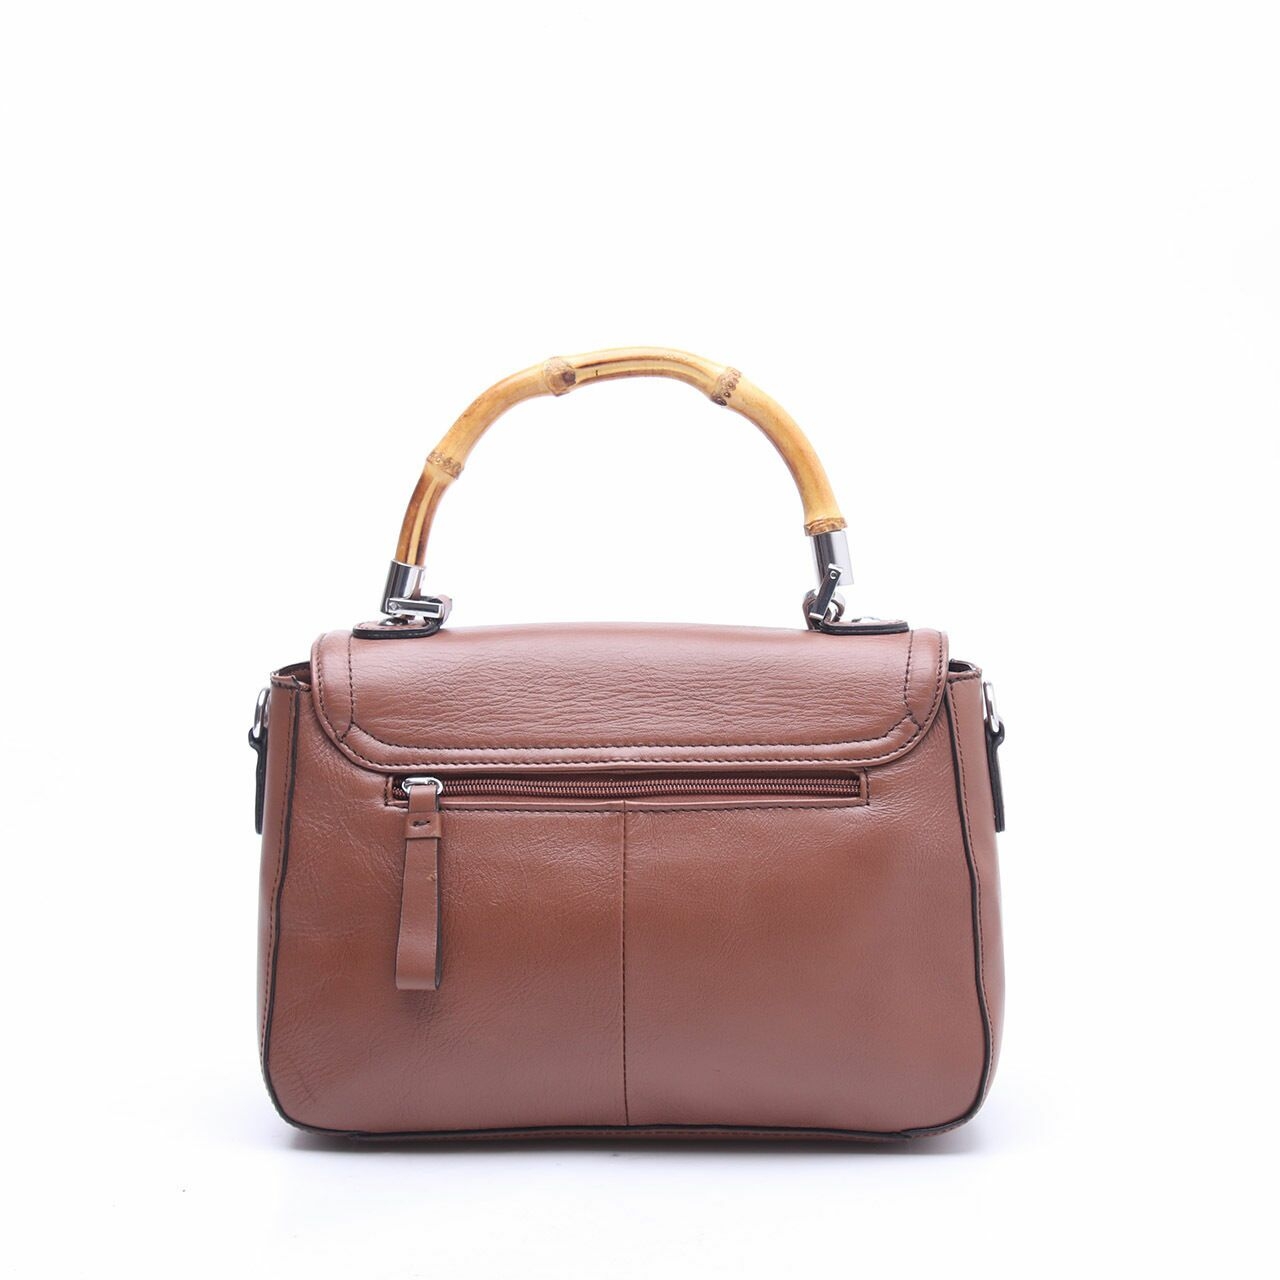 ETIENNE AIGNER Brown Woverly Handbag